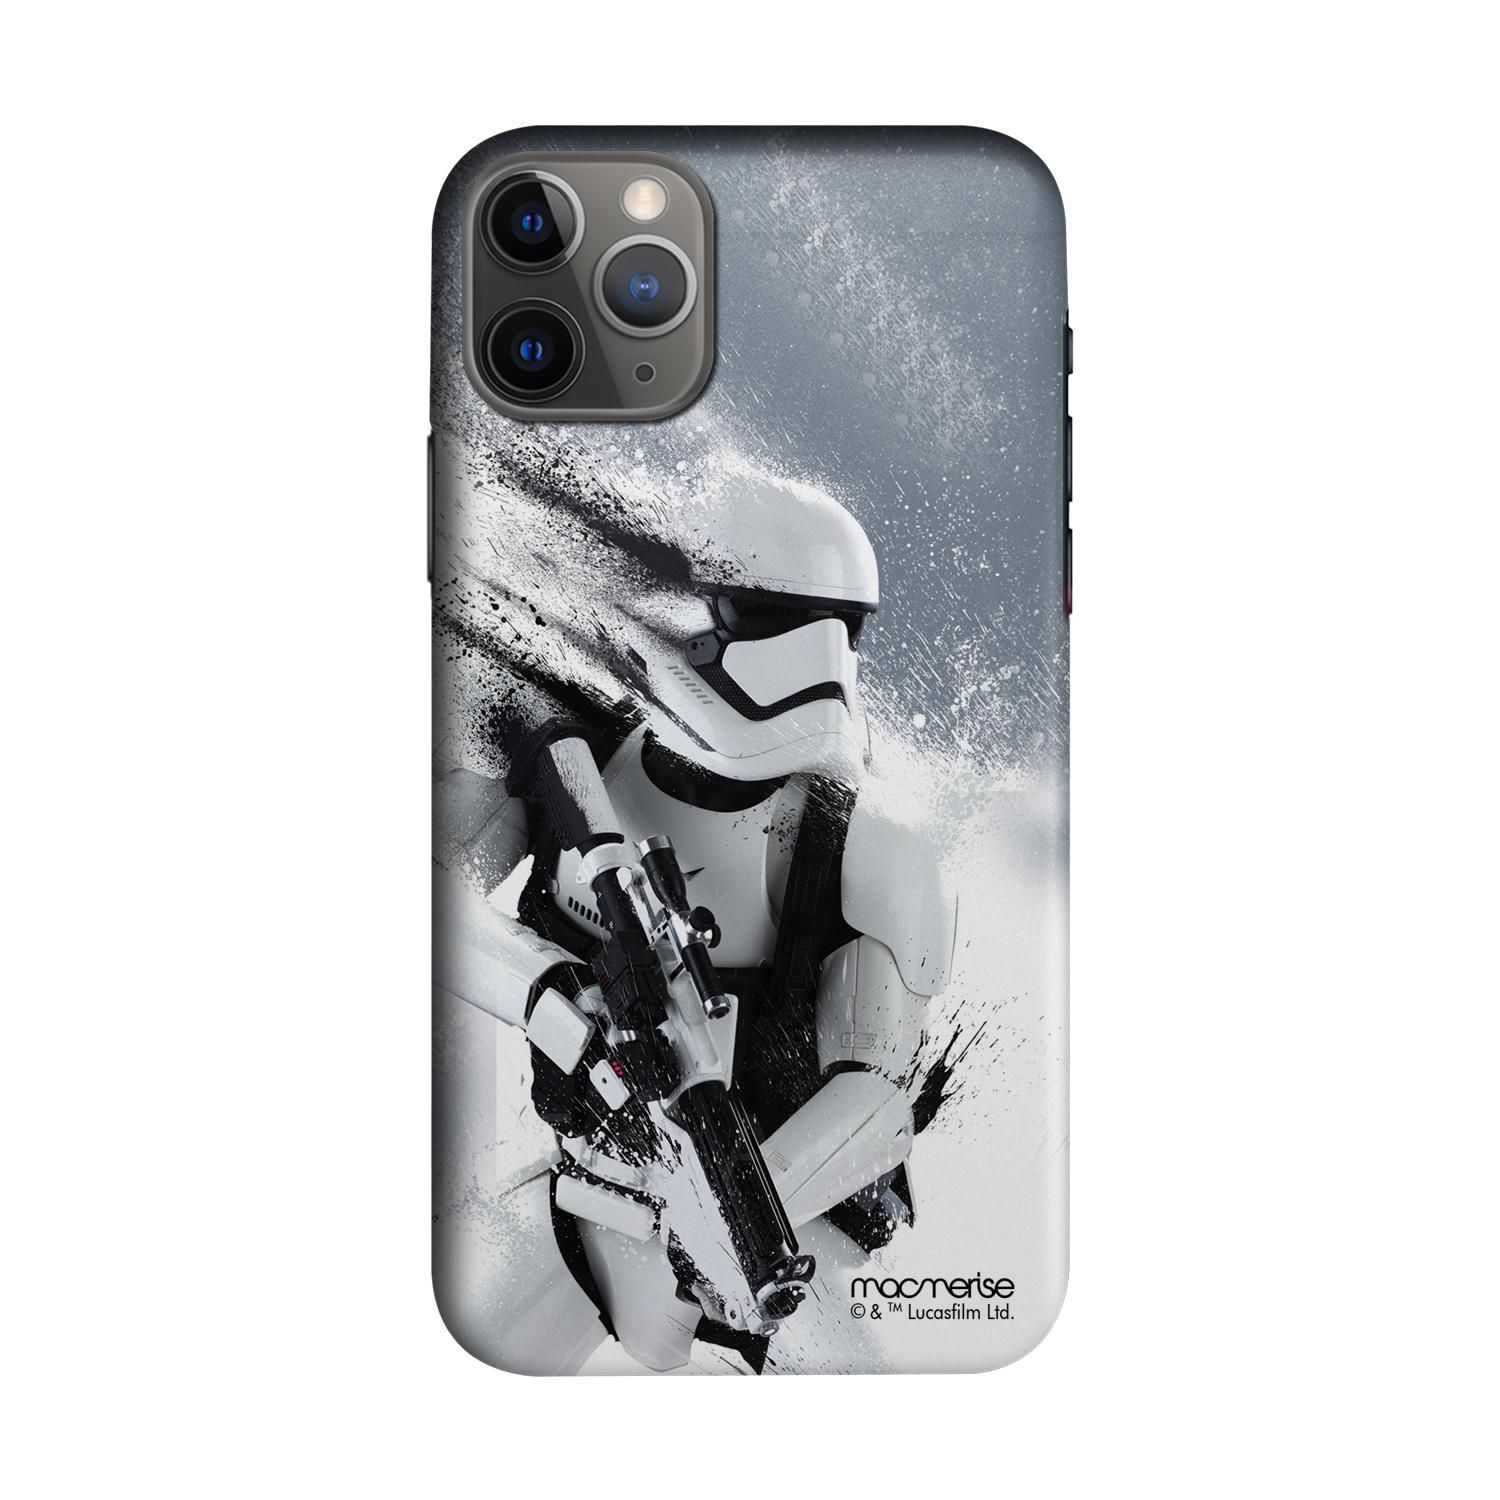 Buy Trooper Storm - Sleek Phone Case for iPhone 11 Pro Online